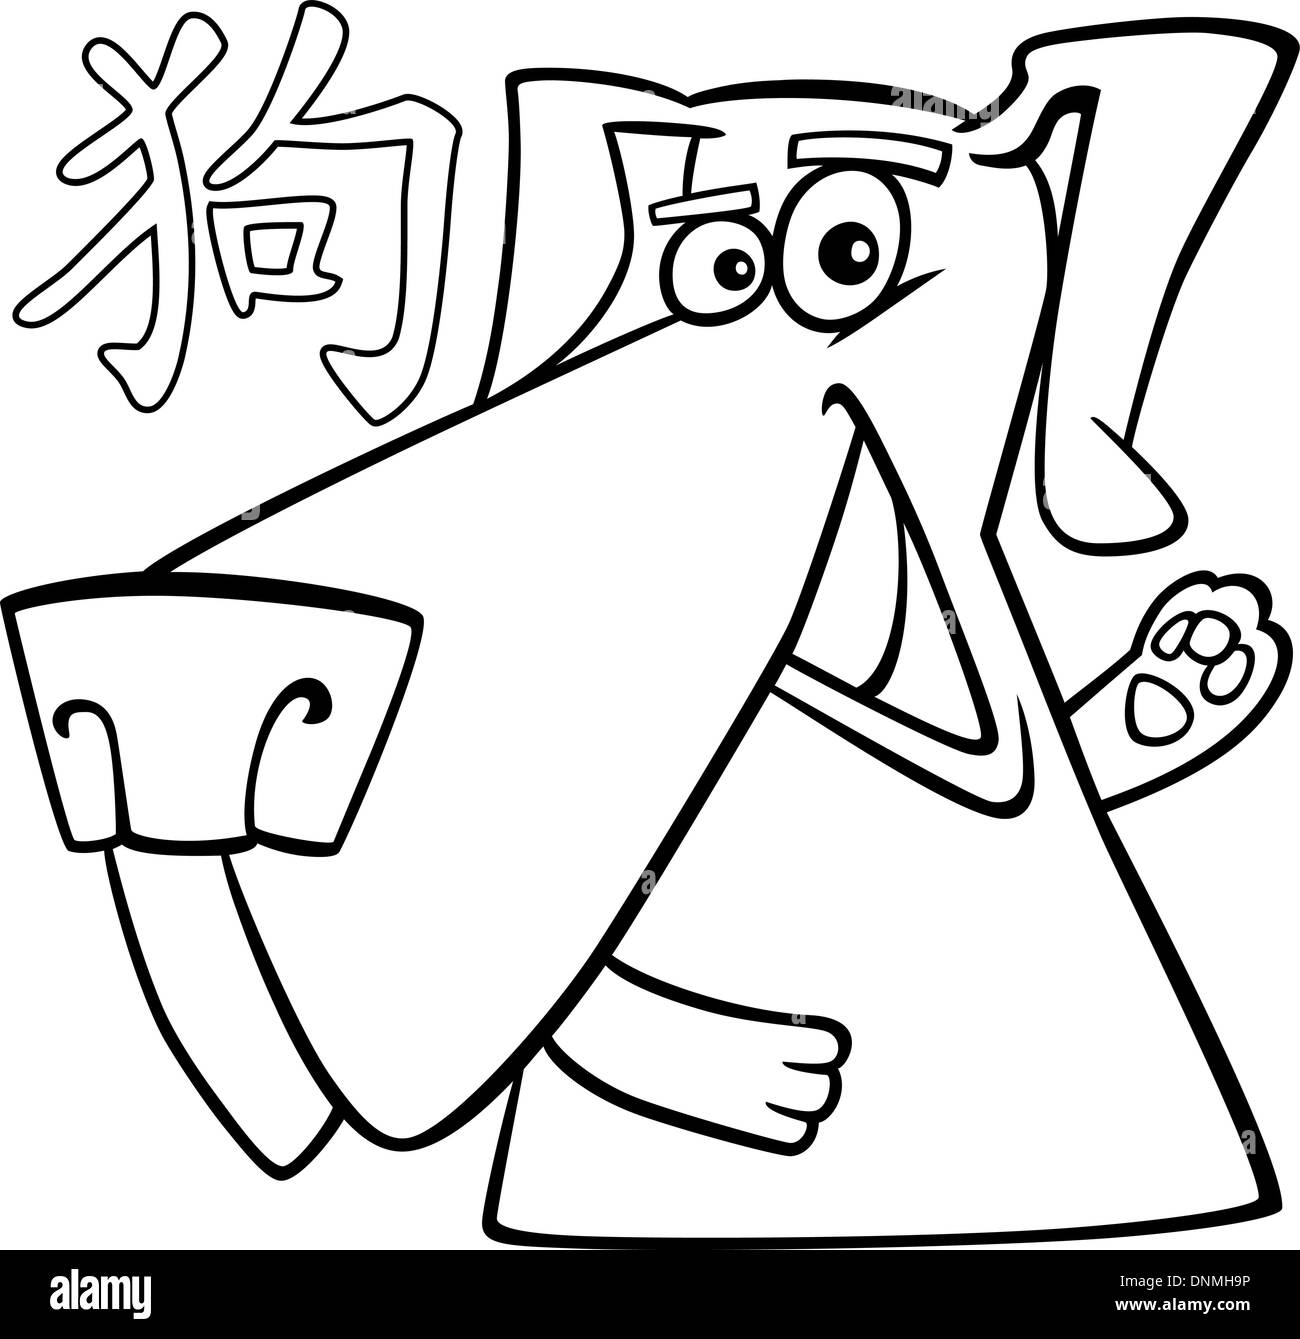 Black and white cartoon illustration of Dog Chinese horoscope sign Stock Vector